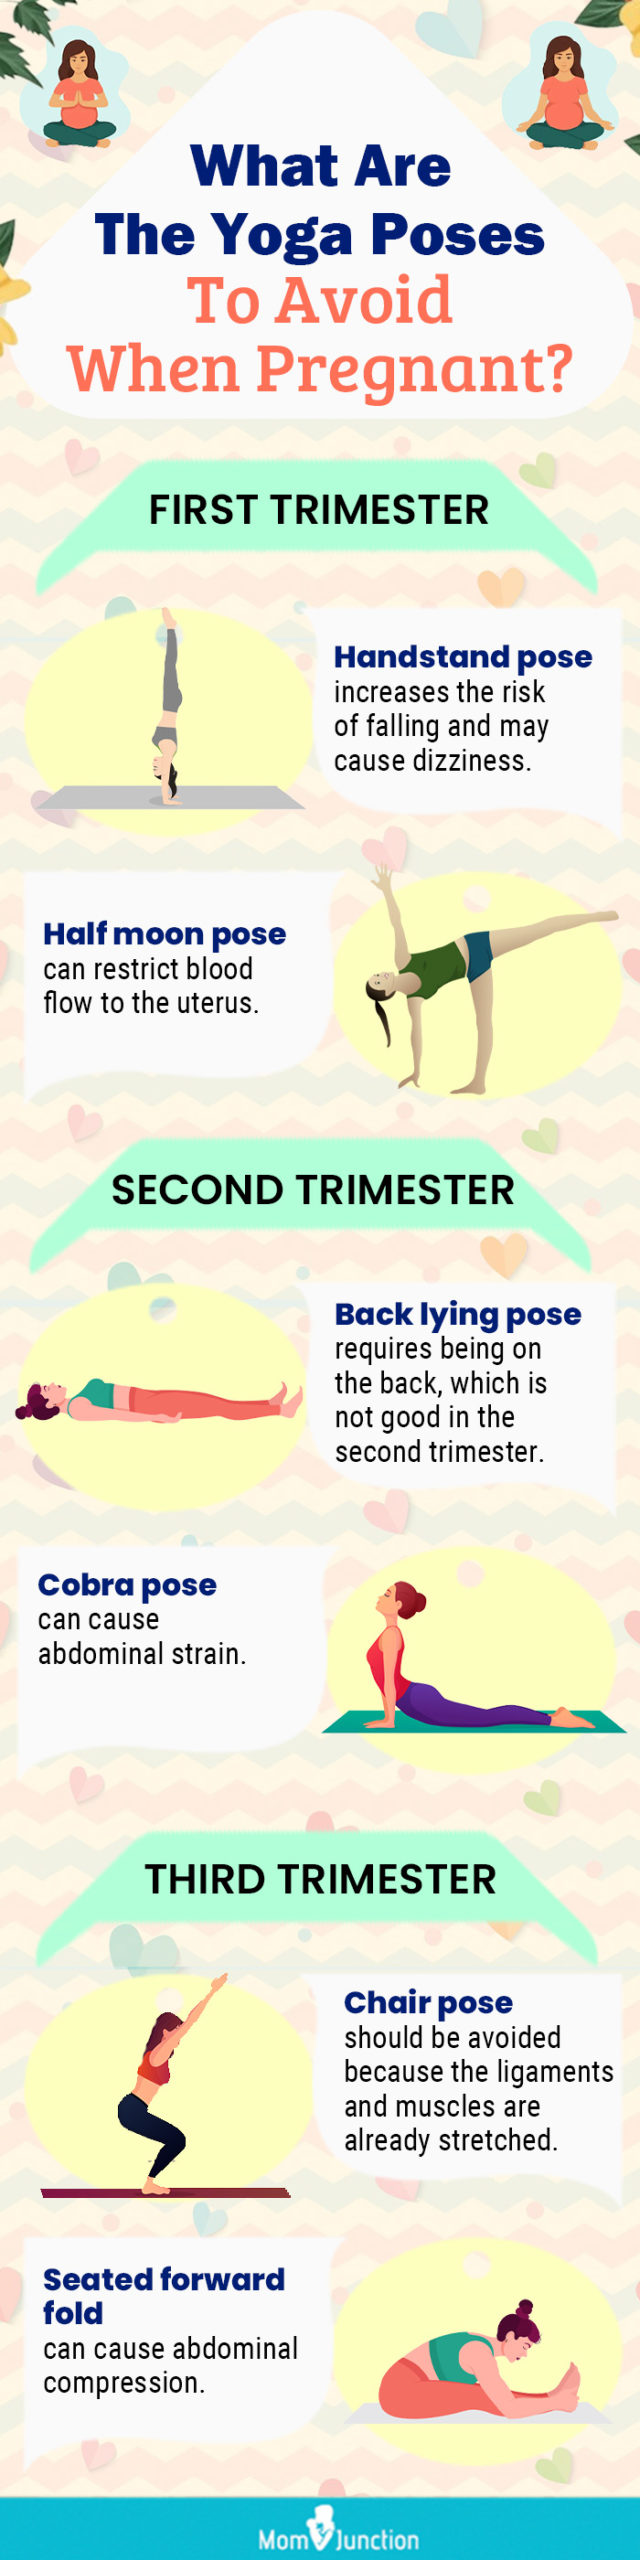 The third trimester... - Ashtanga Yoga Room